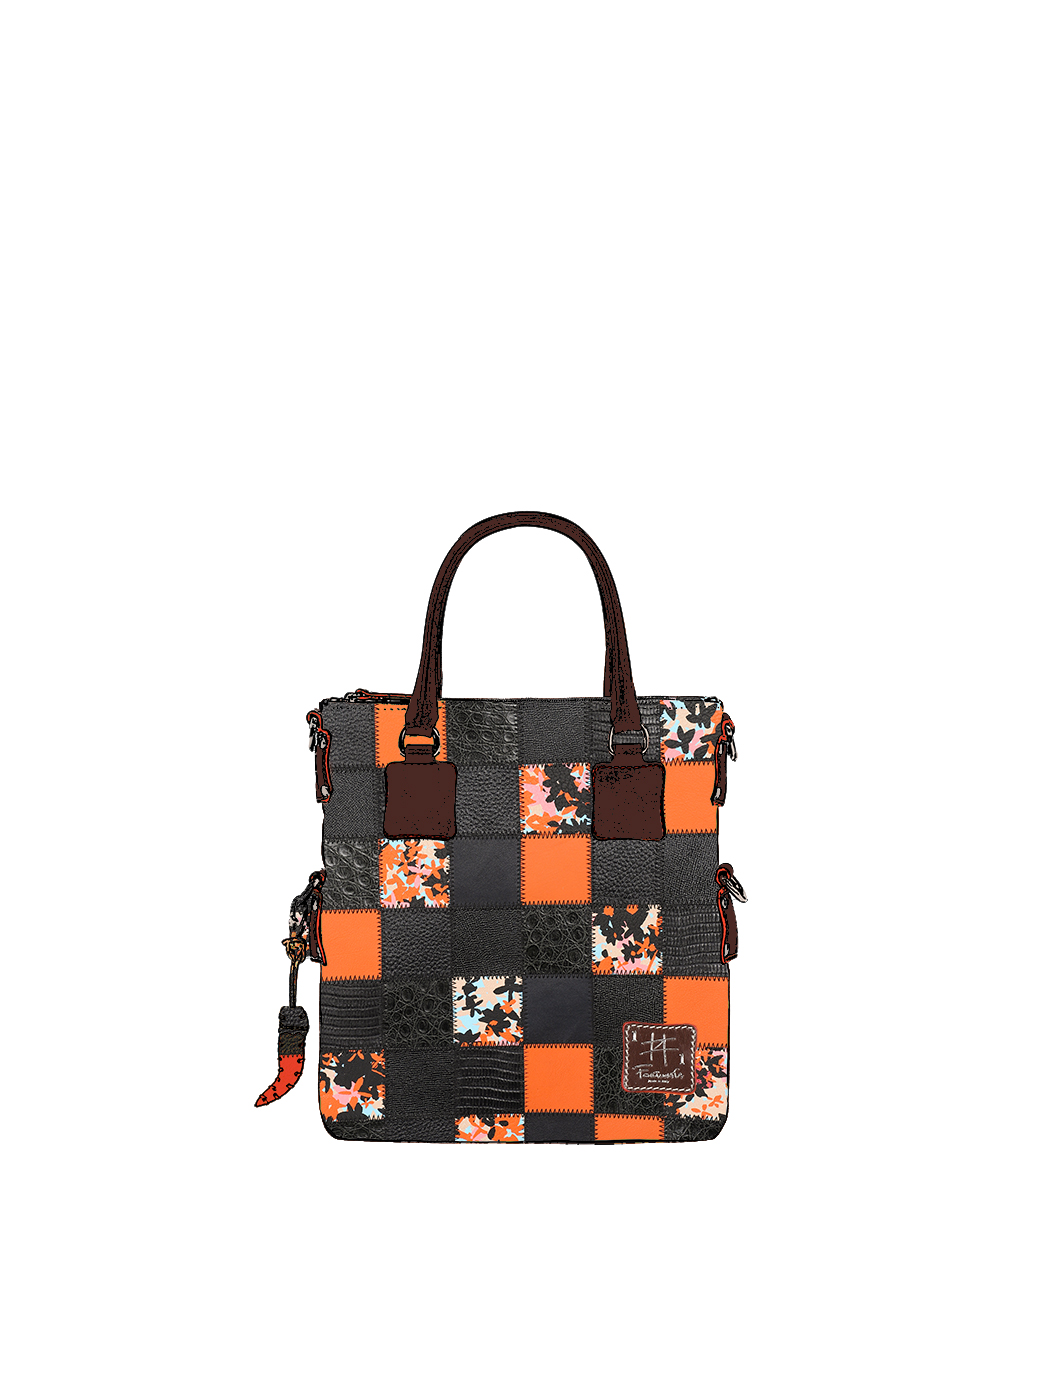 Women's Bag Leather Patchwork Tote - Orange